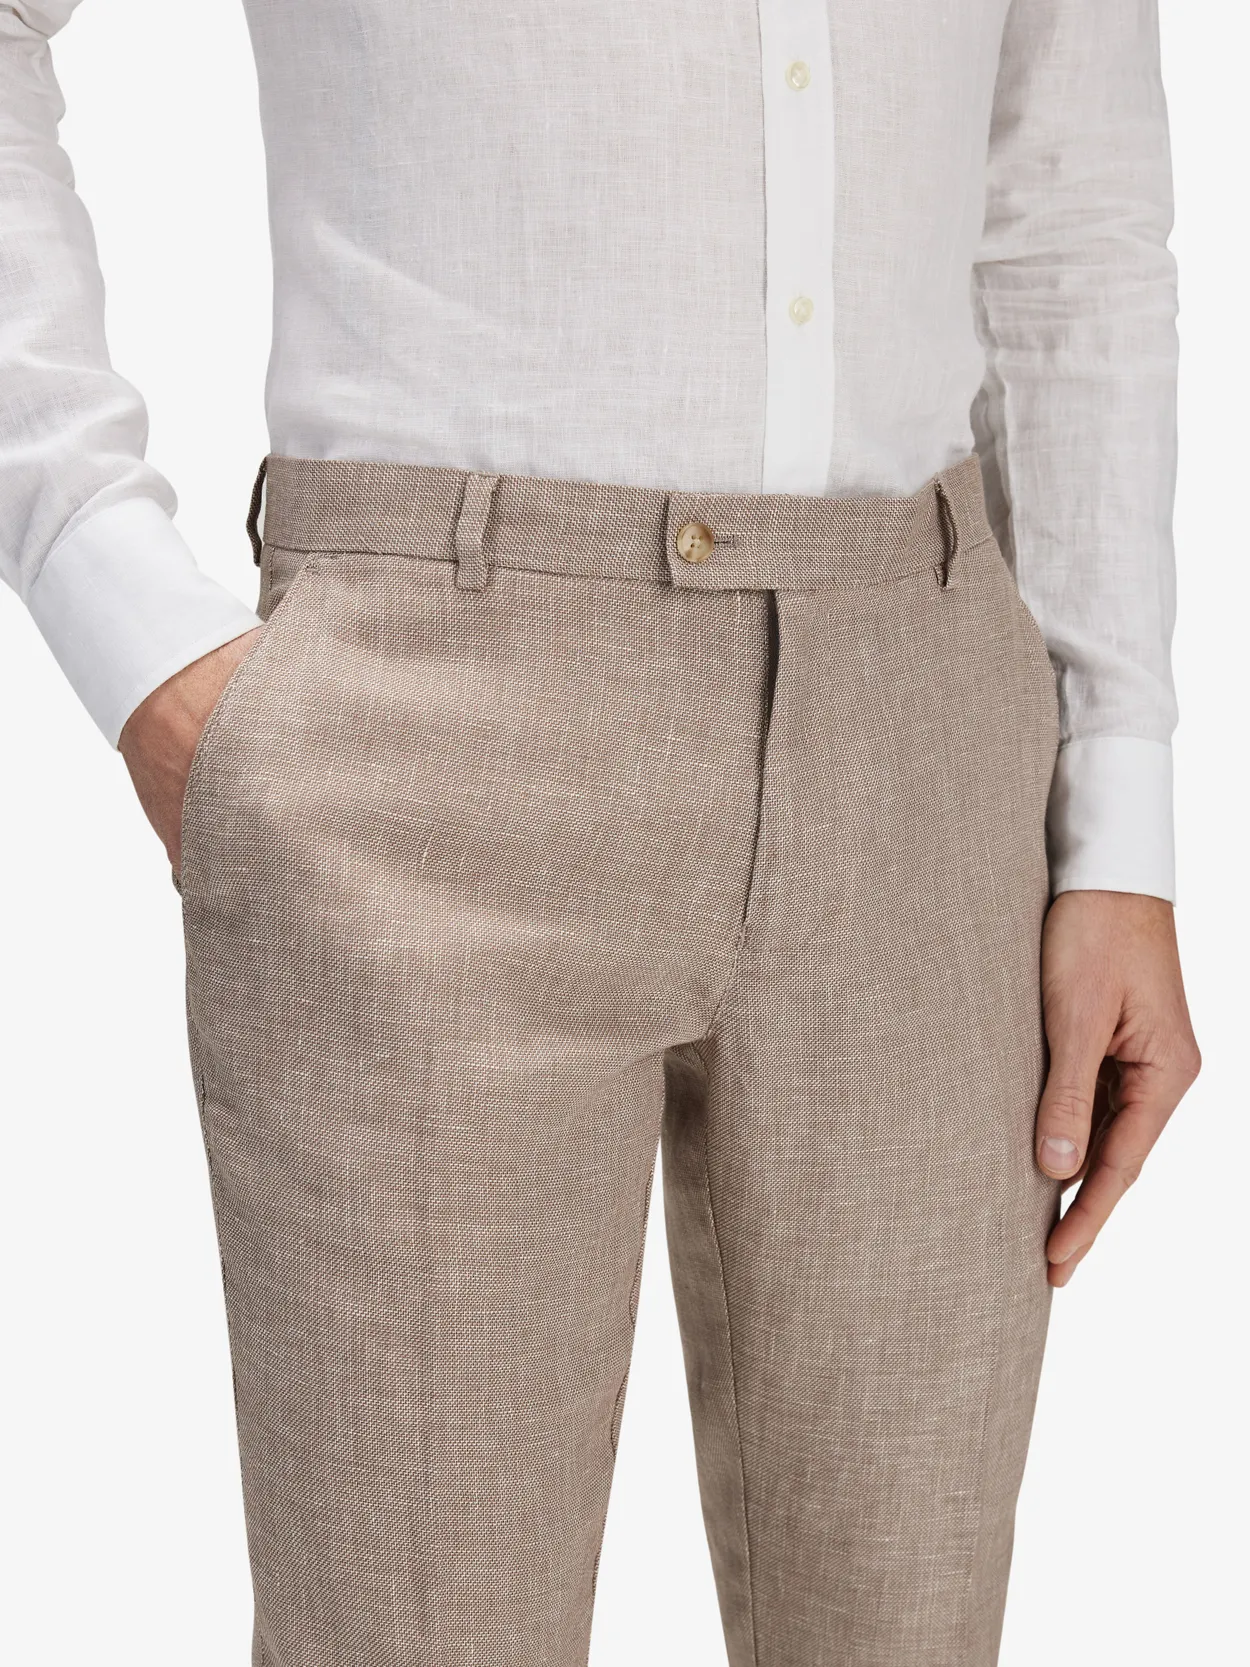 John W. Nordstrom Torino Solid Linen Trousers, $169